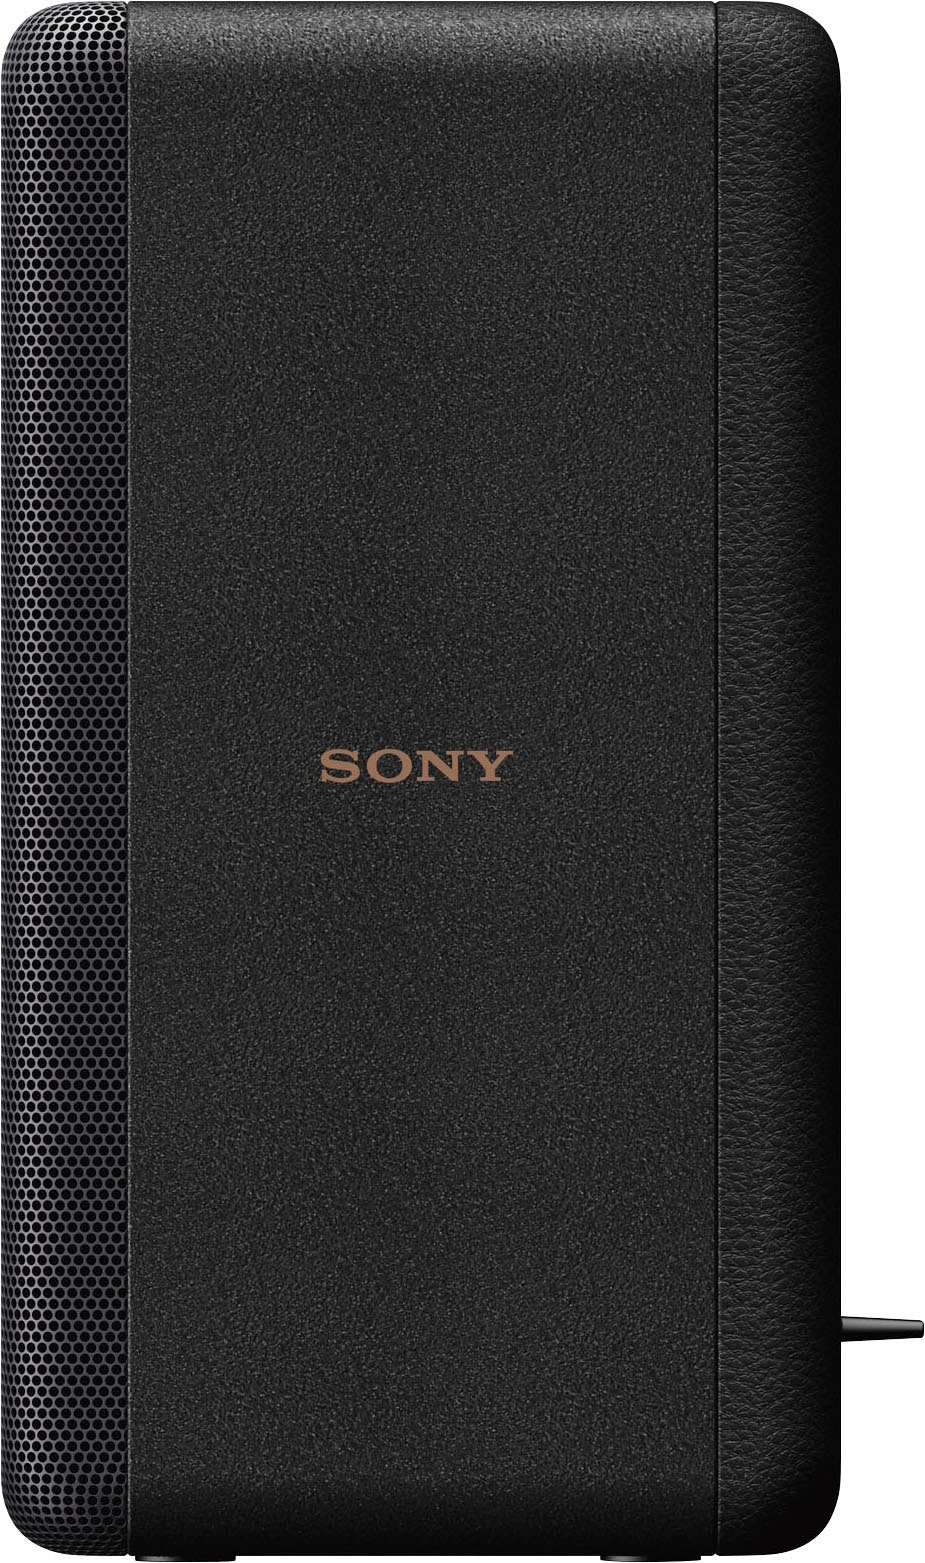 Sony SA-RS3S W) kabellose zweifache Lautsprecher (WLAN, 100 Stereo Rear